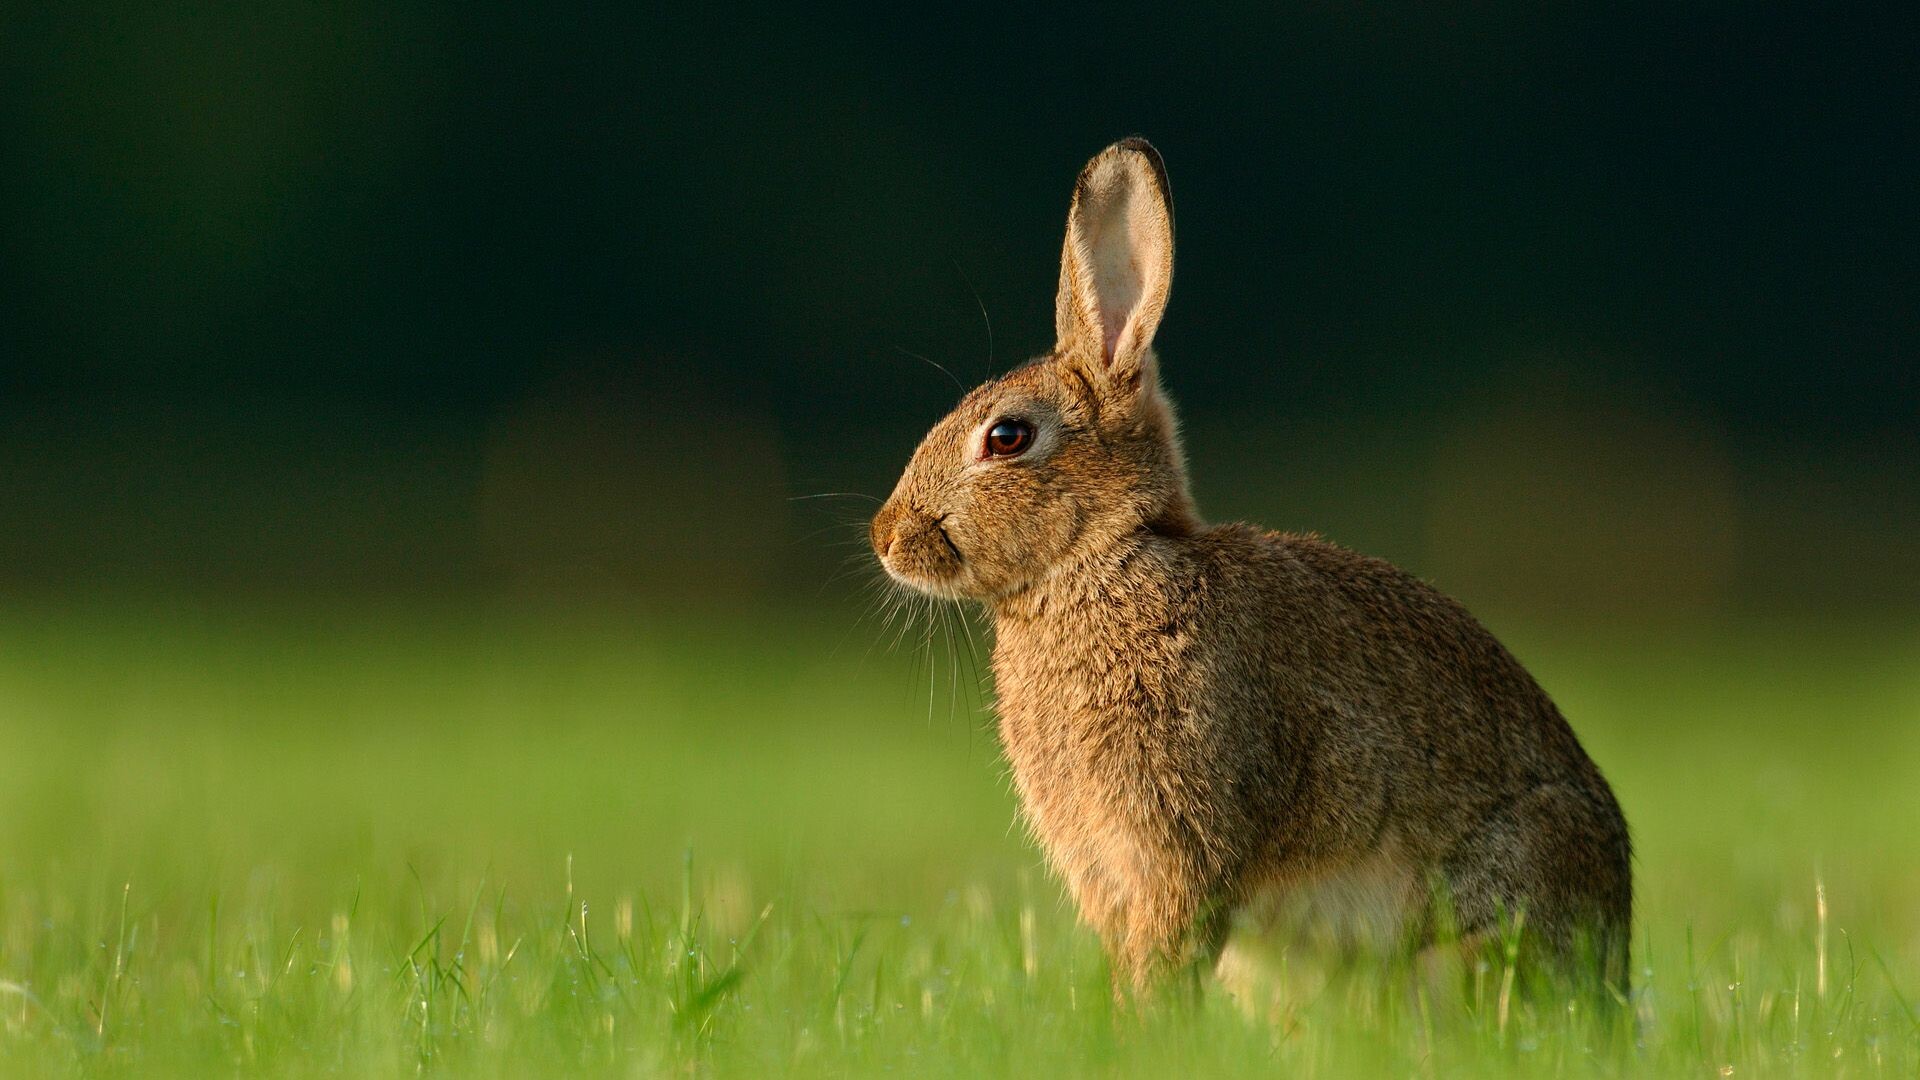 Rabbit: Wild bunny, Oryctolagus cuniculus, A small furry animal. 1920x1080 Full HD Background.